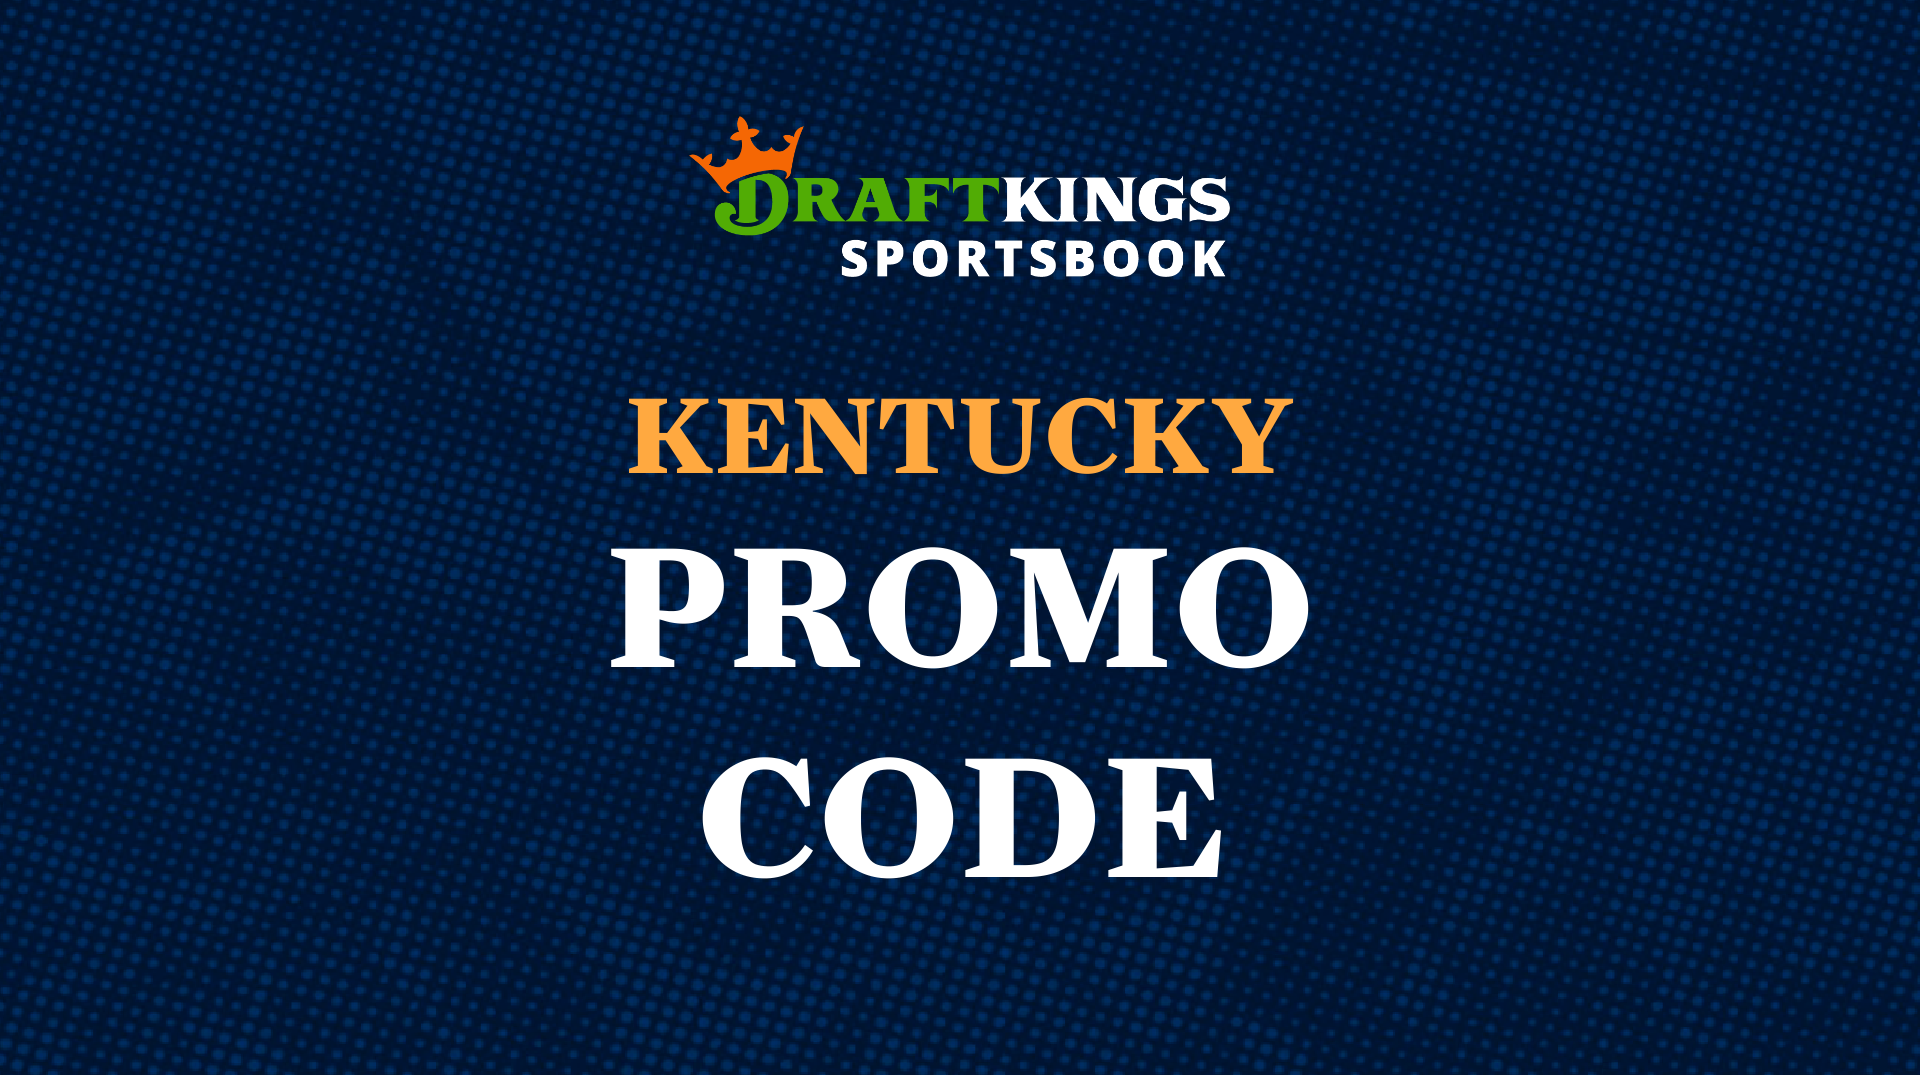 DraftKings Promo Code for NFL Week 4: Bet $5, Get $200 Sunday Bonus